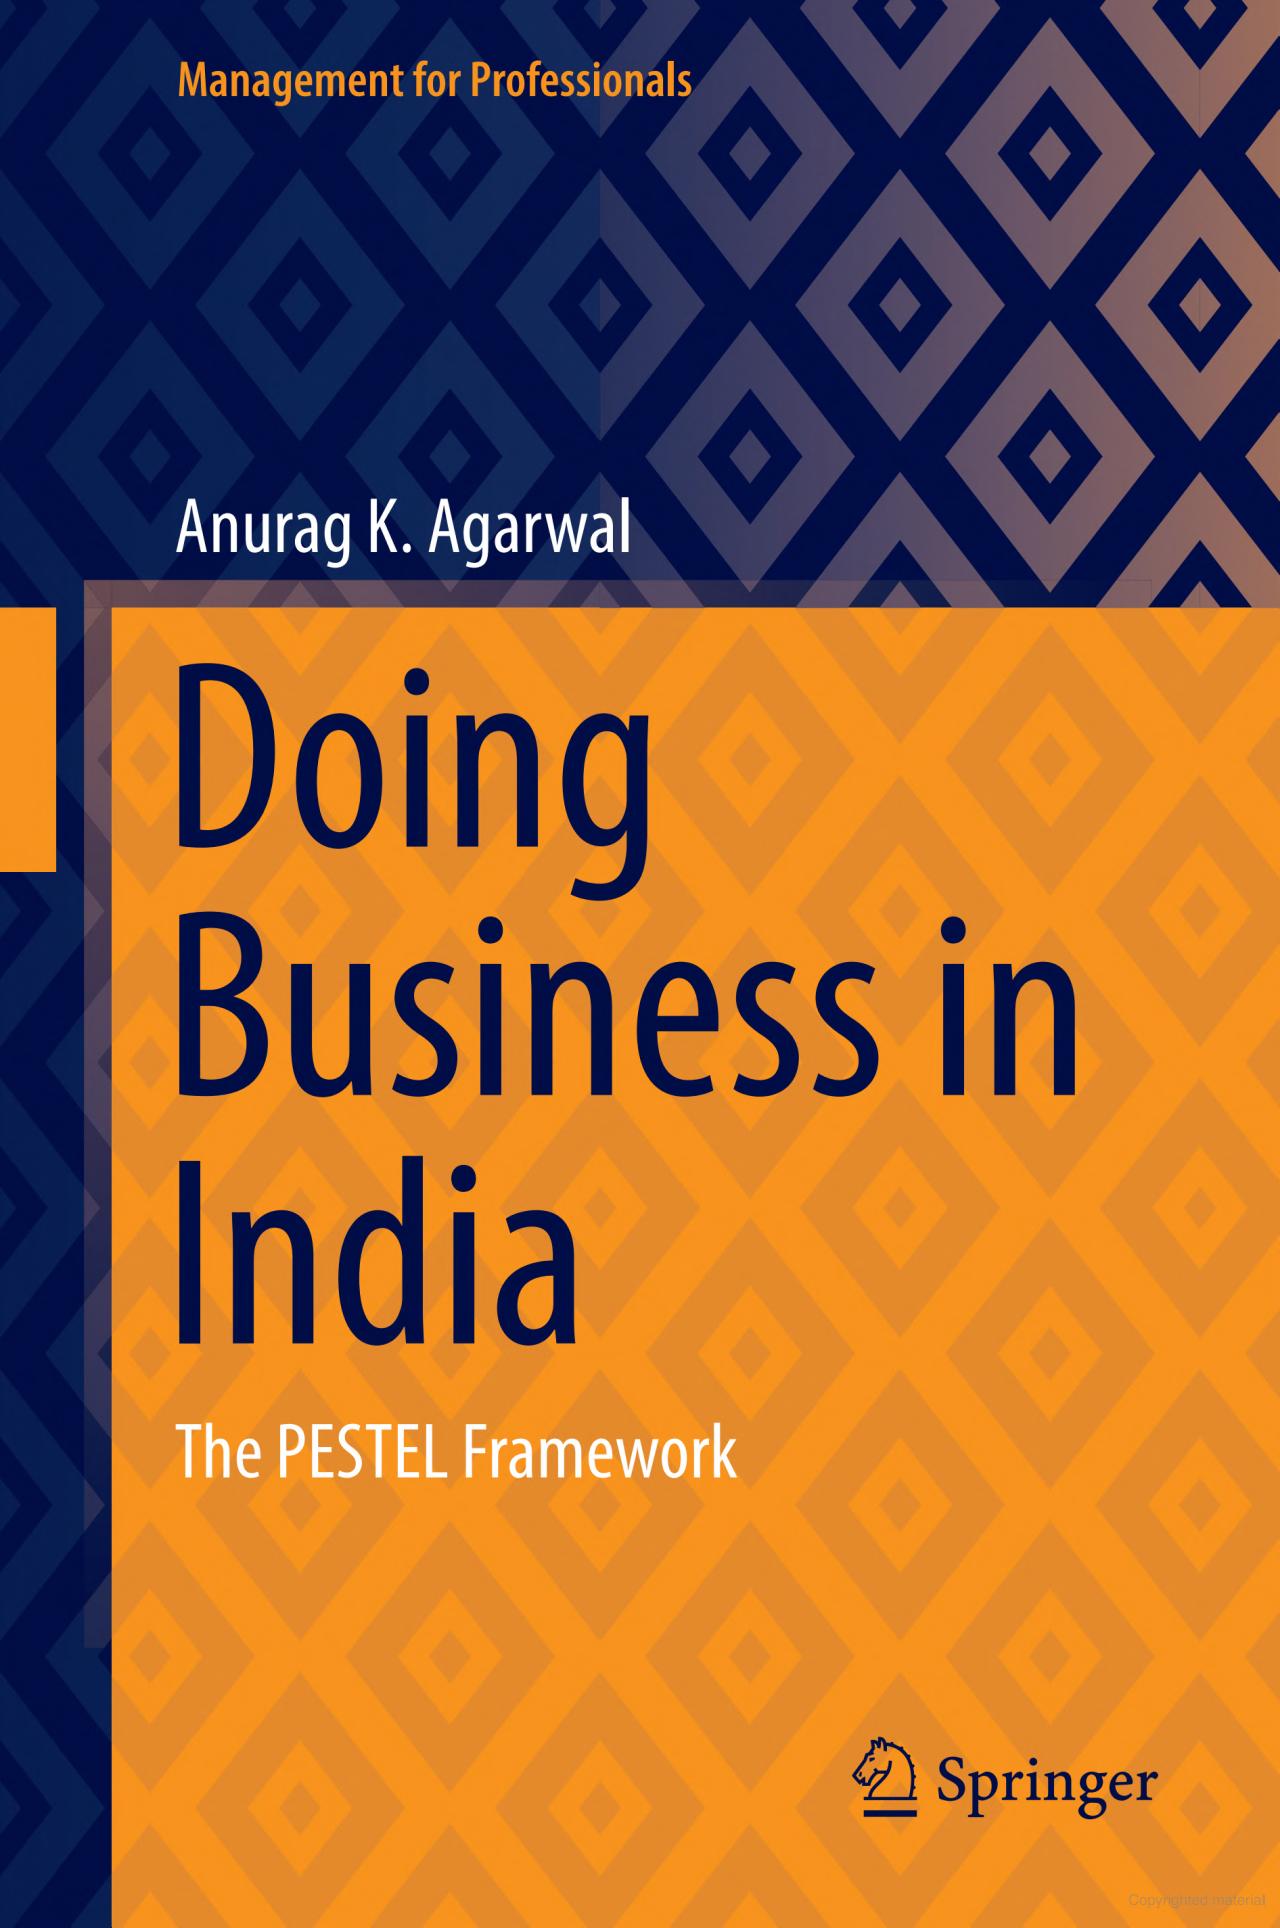 Doing business in India: The PESTEL framework